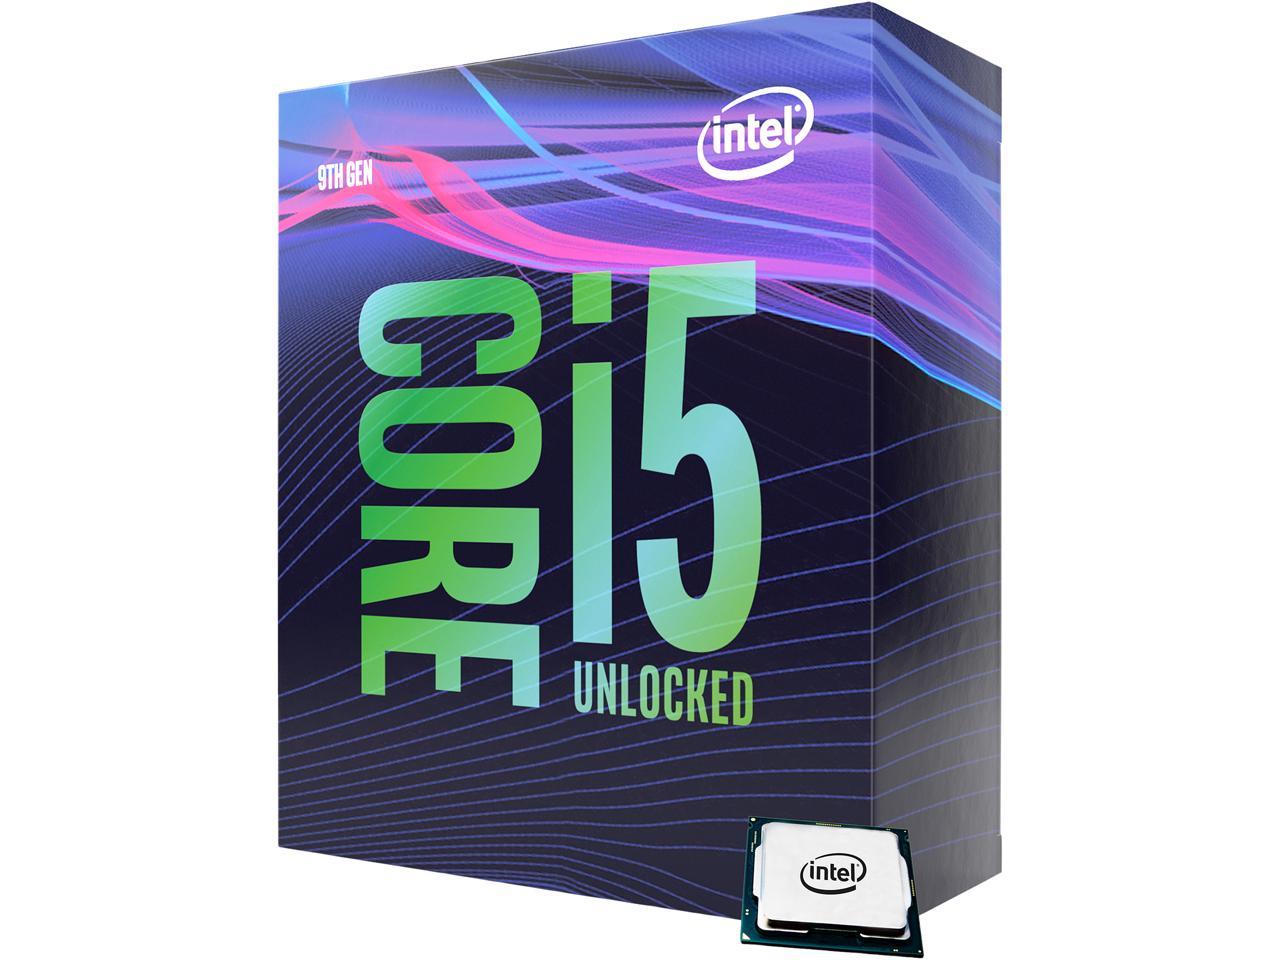 Intel Core i5-9600K Desktop Processor 6 Cores up to 4.6 GHz Turbo Unlocked with Prime Z390-A Motherboard LGA1151 ATX DDR4 DP HDMI M.2 USB 3.1 Gen2 Gigabit LAN 